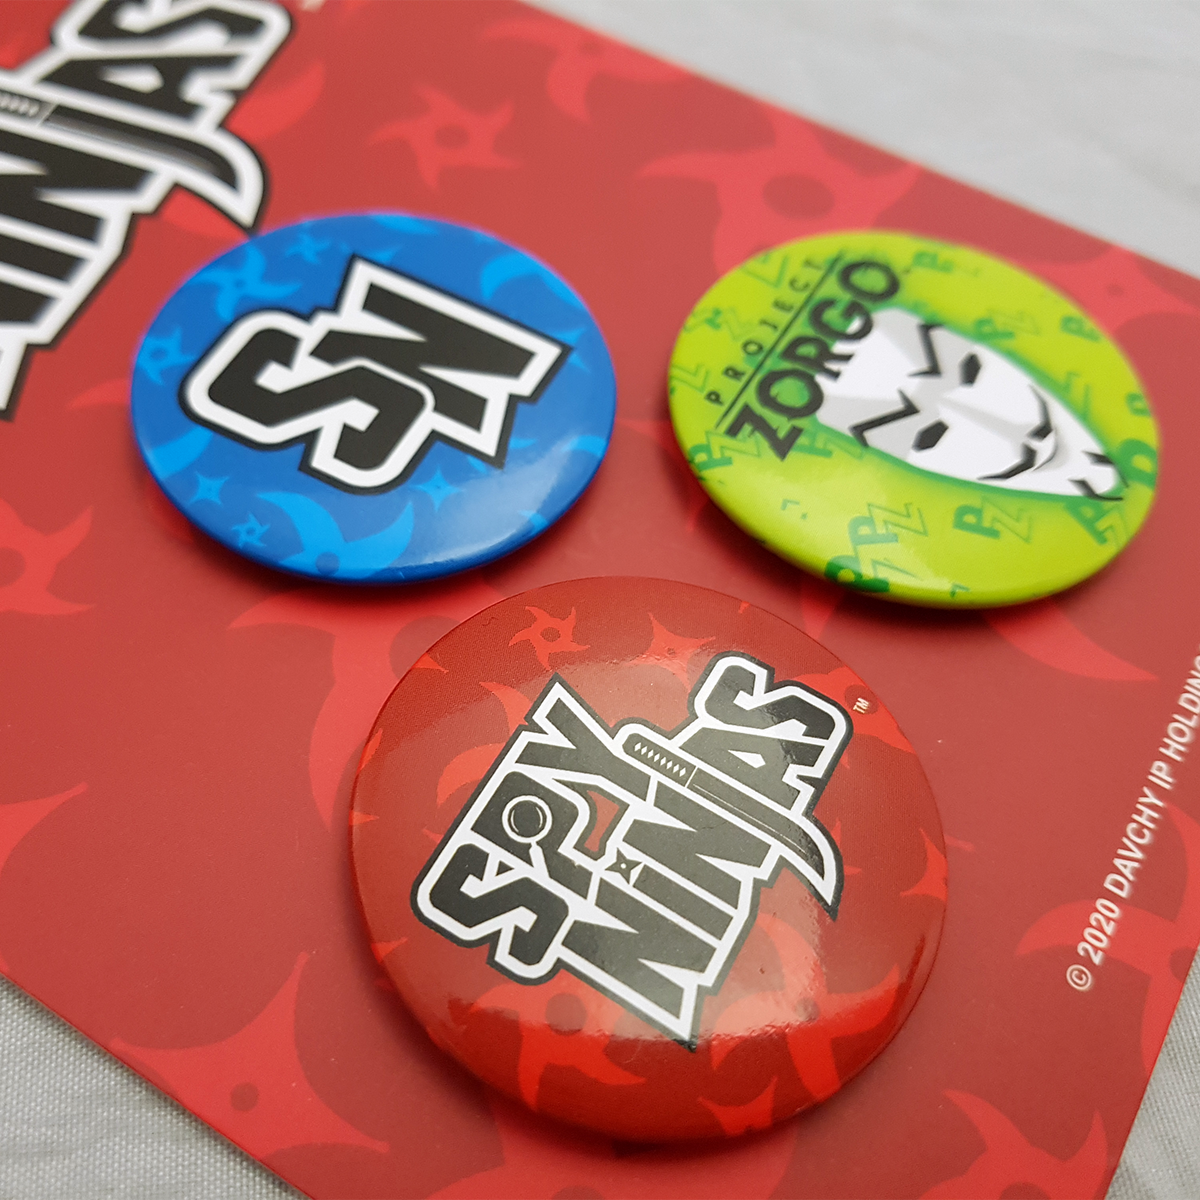 Spy Ninjas Button Badges - Set of 3